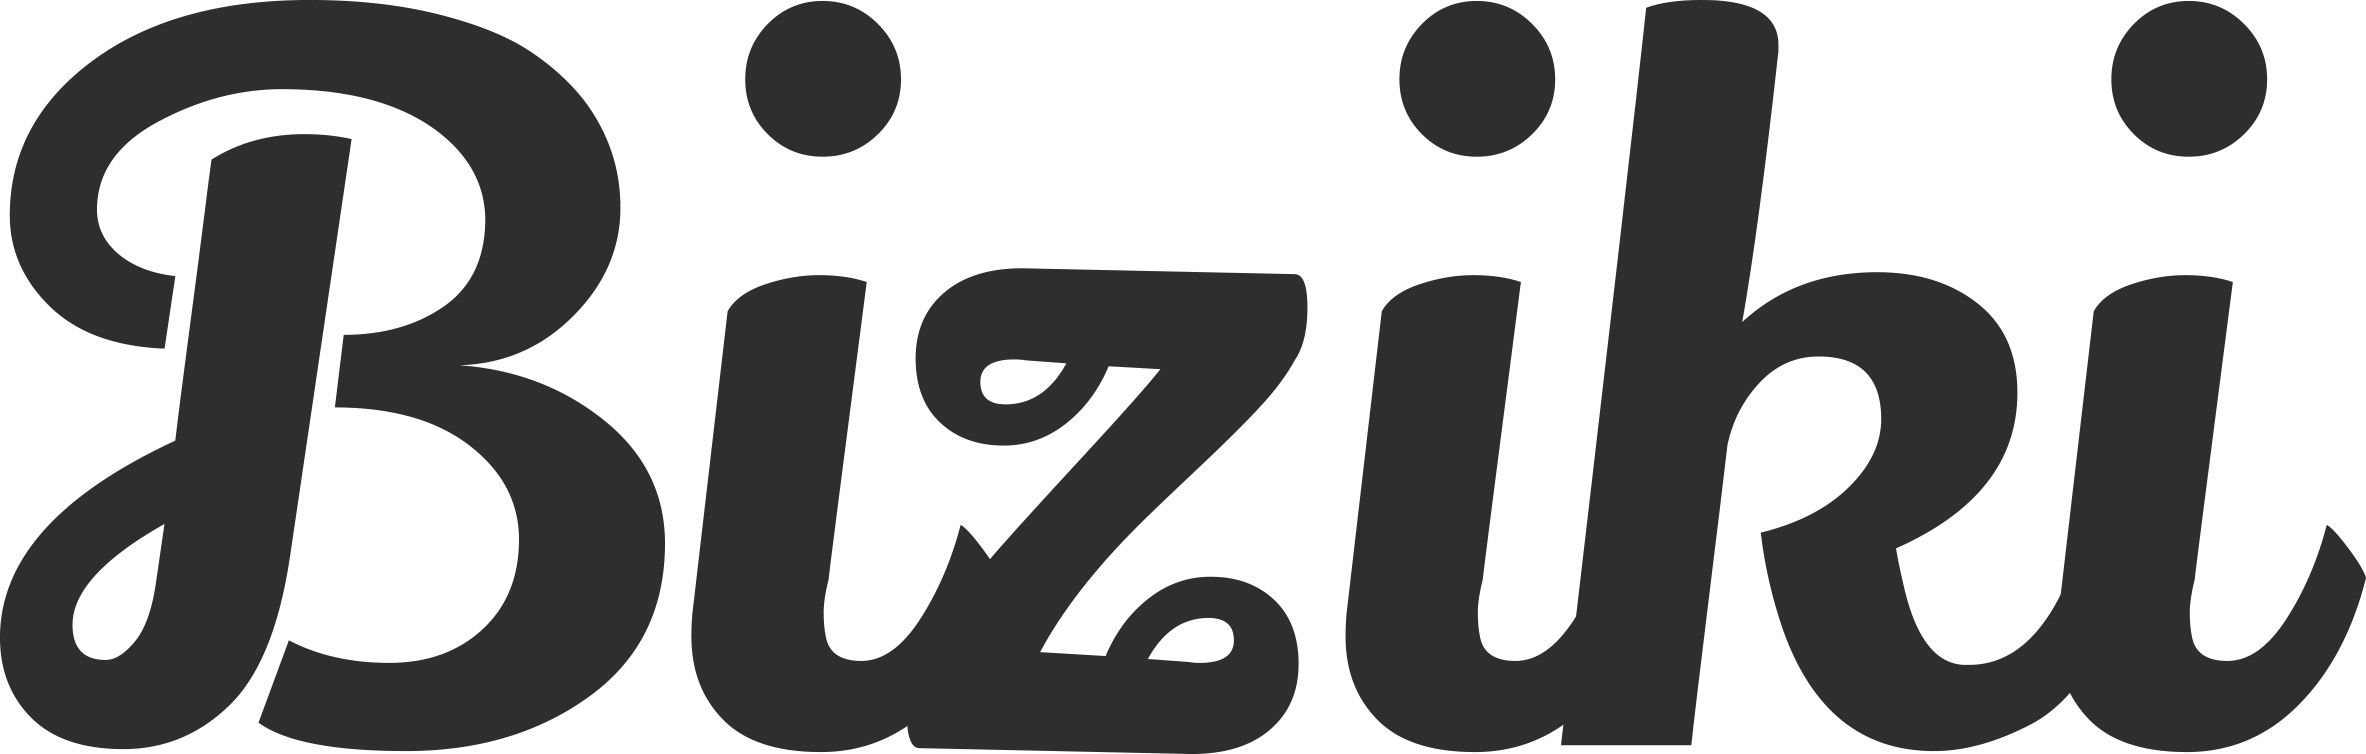 logotipo biziki 1